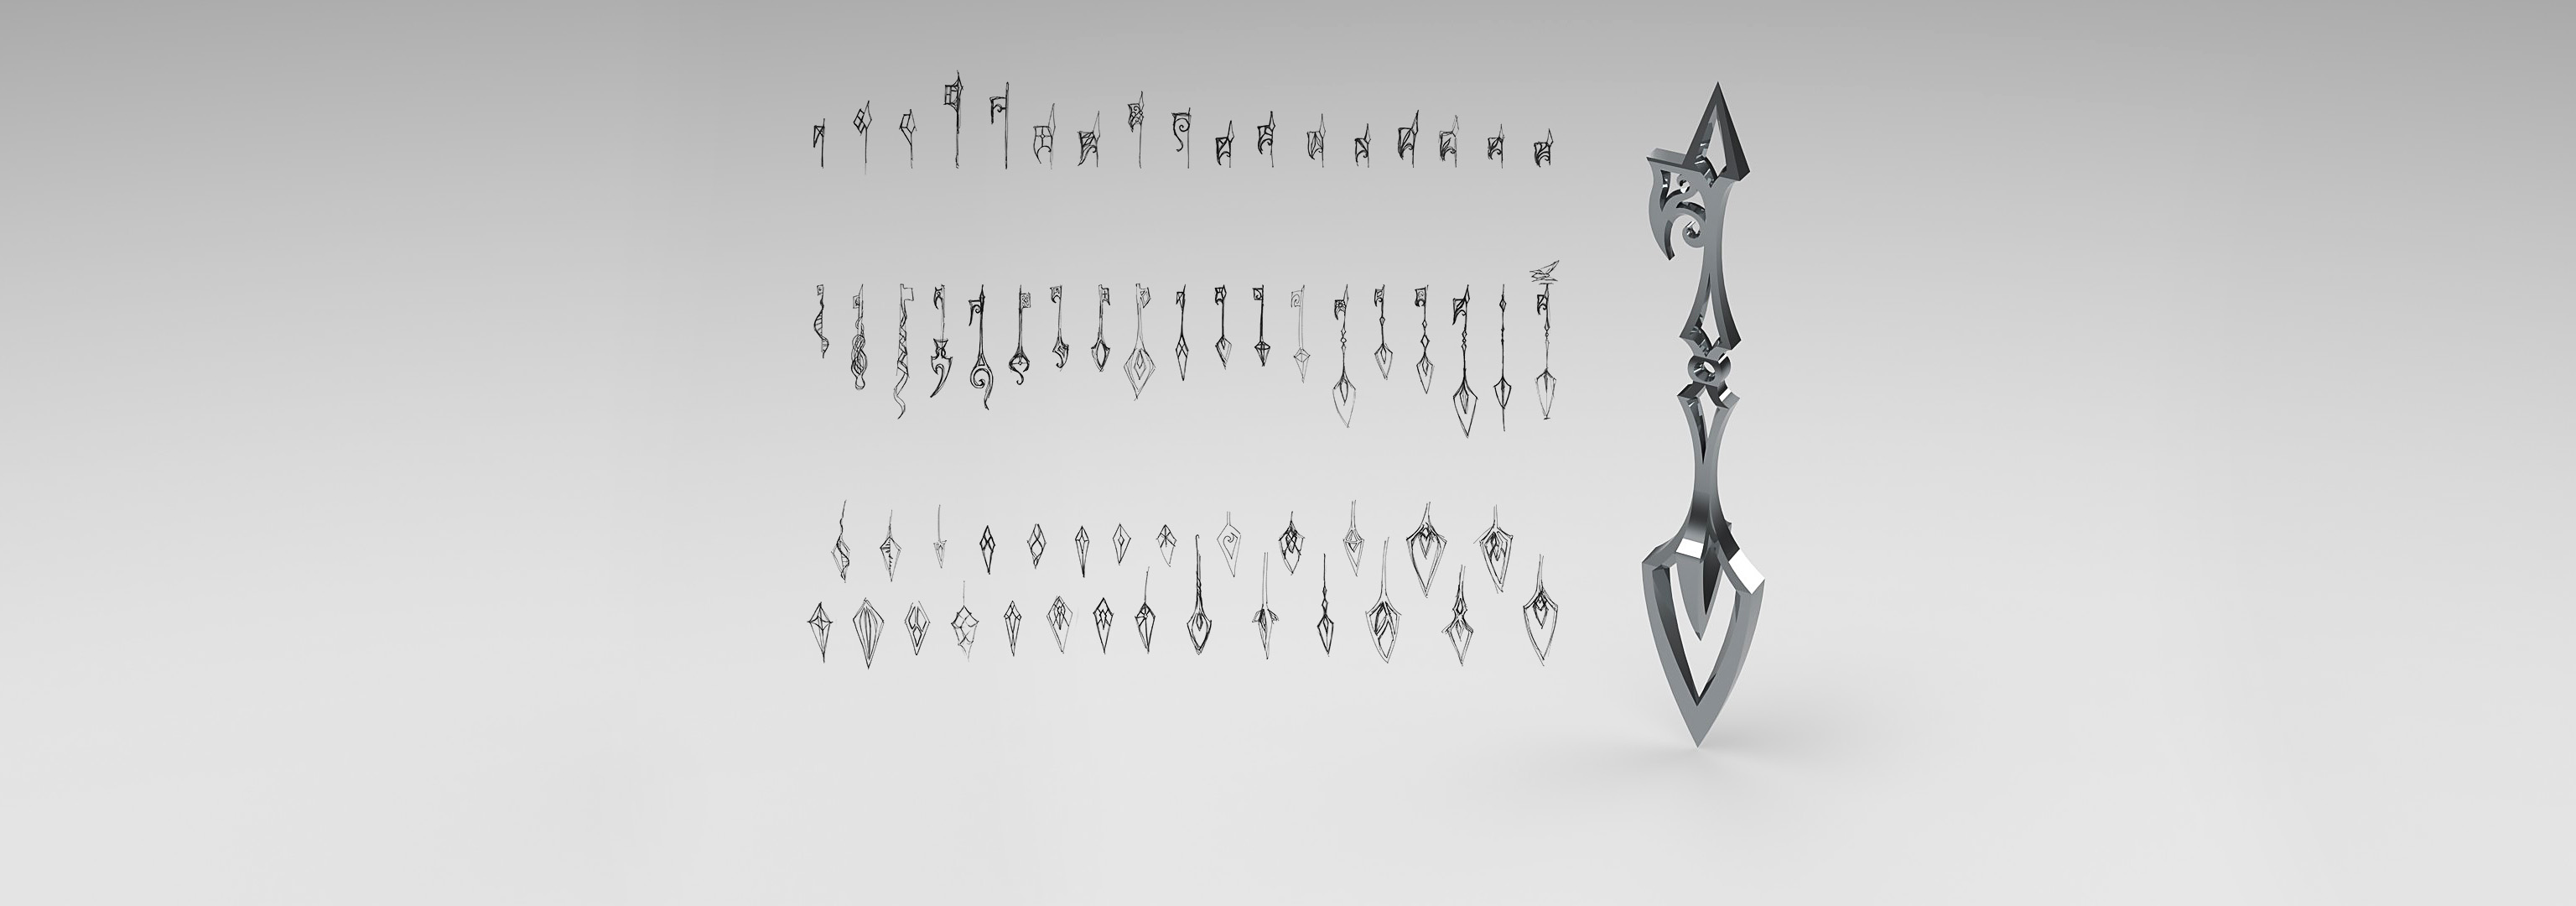 One 3D model and dozens of sketches of skeleton keys.